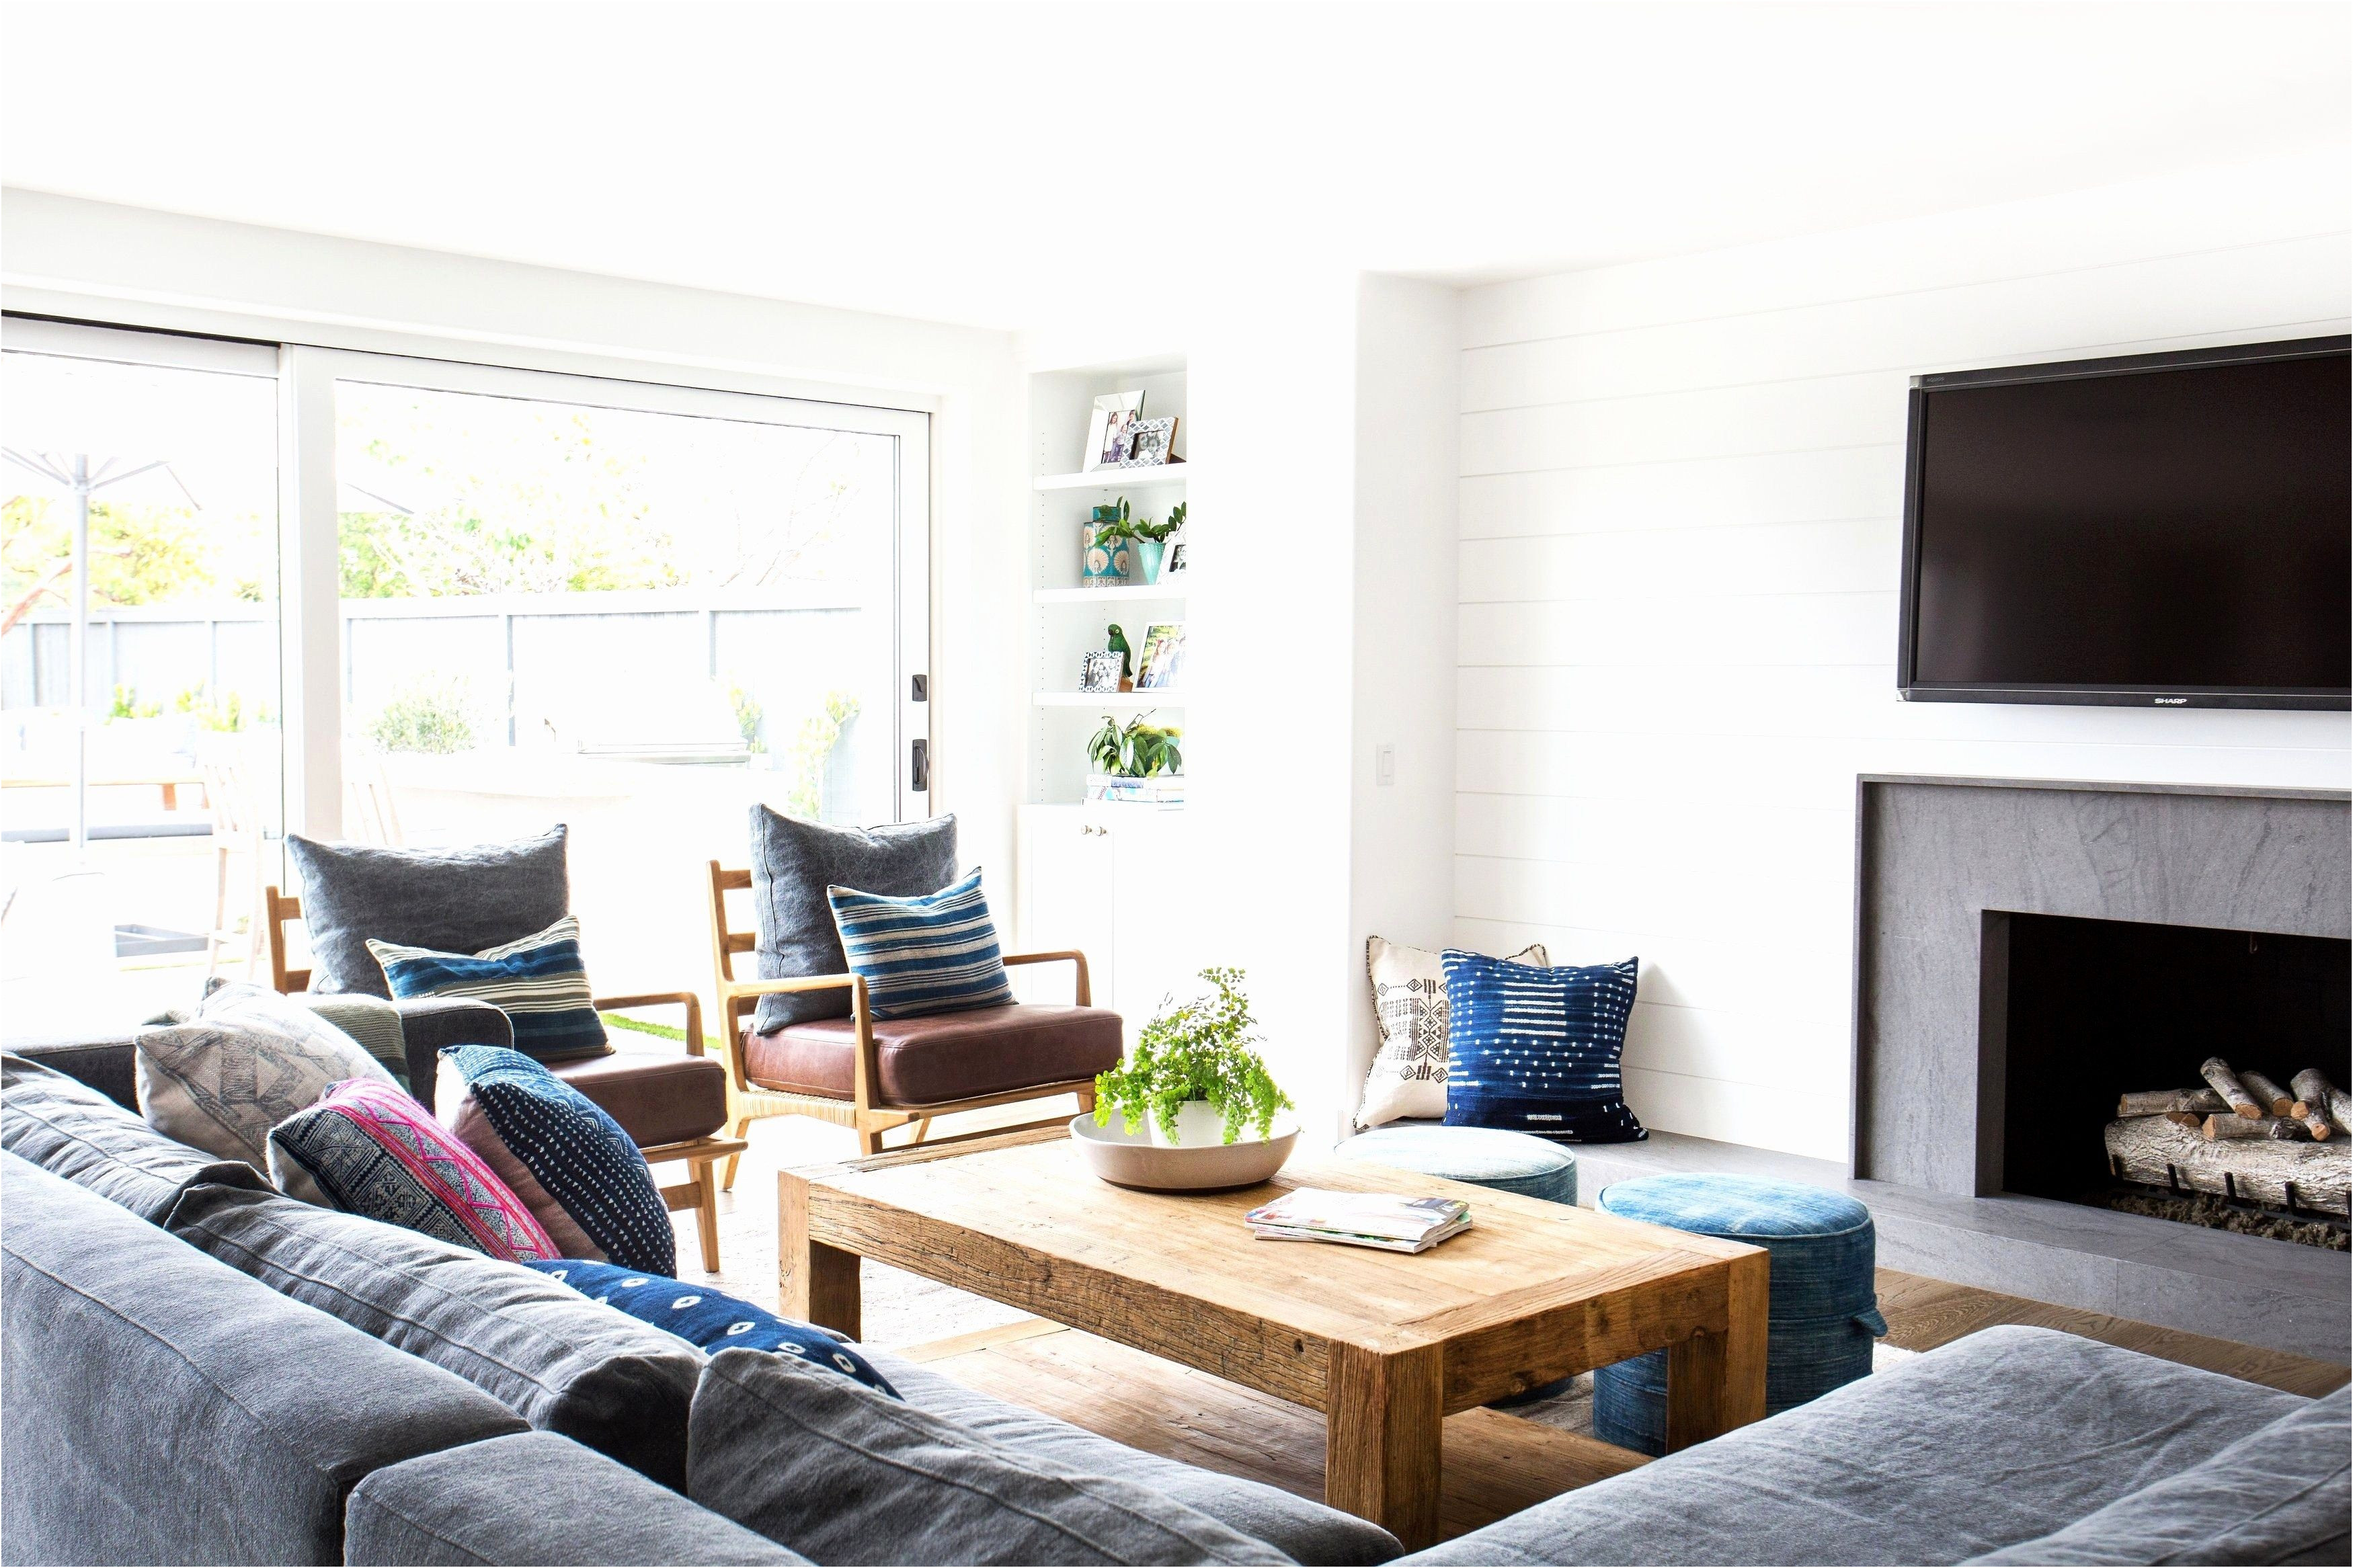 Unique Fireplace Living Room Ideas